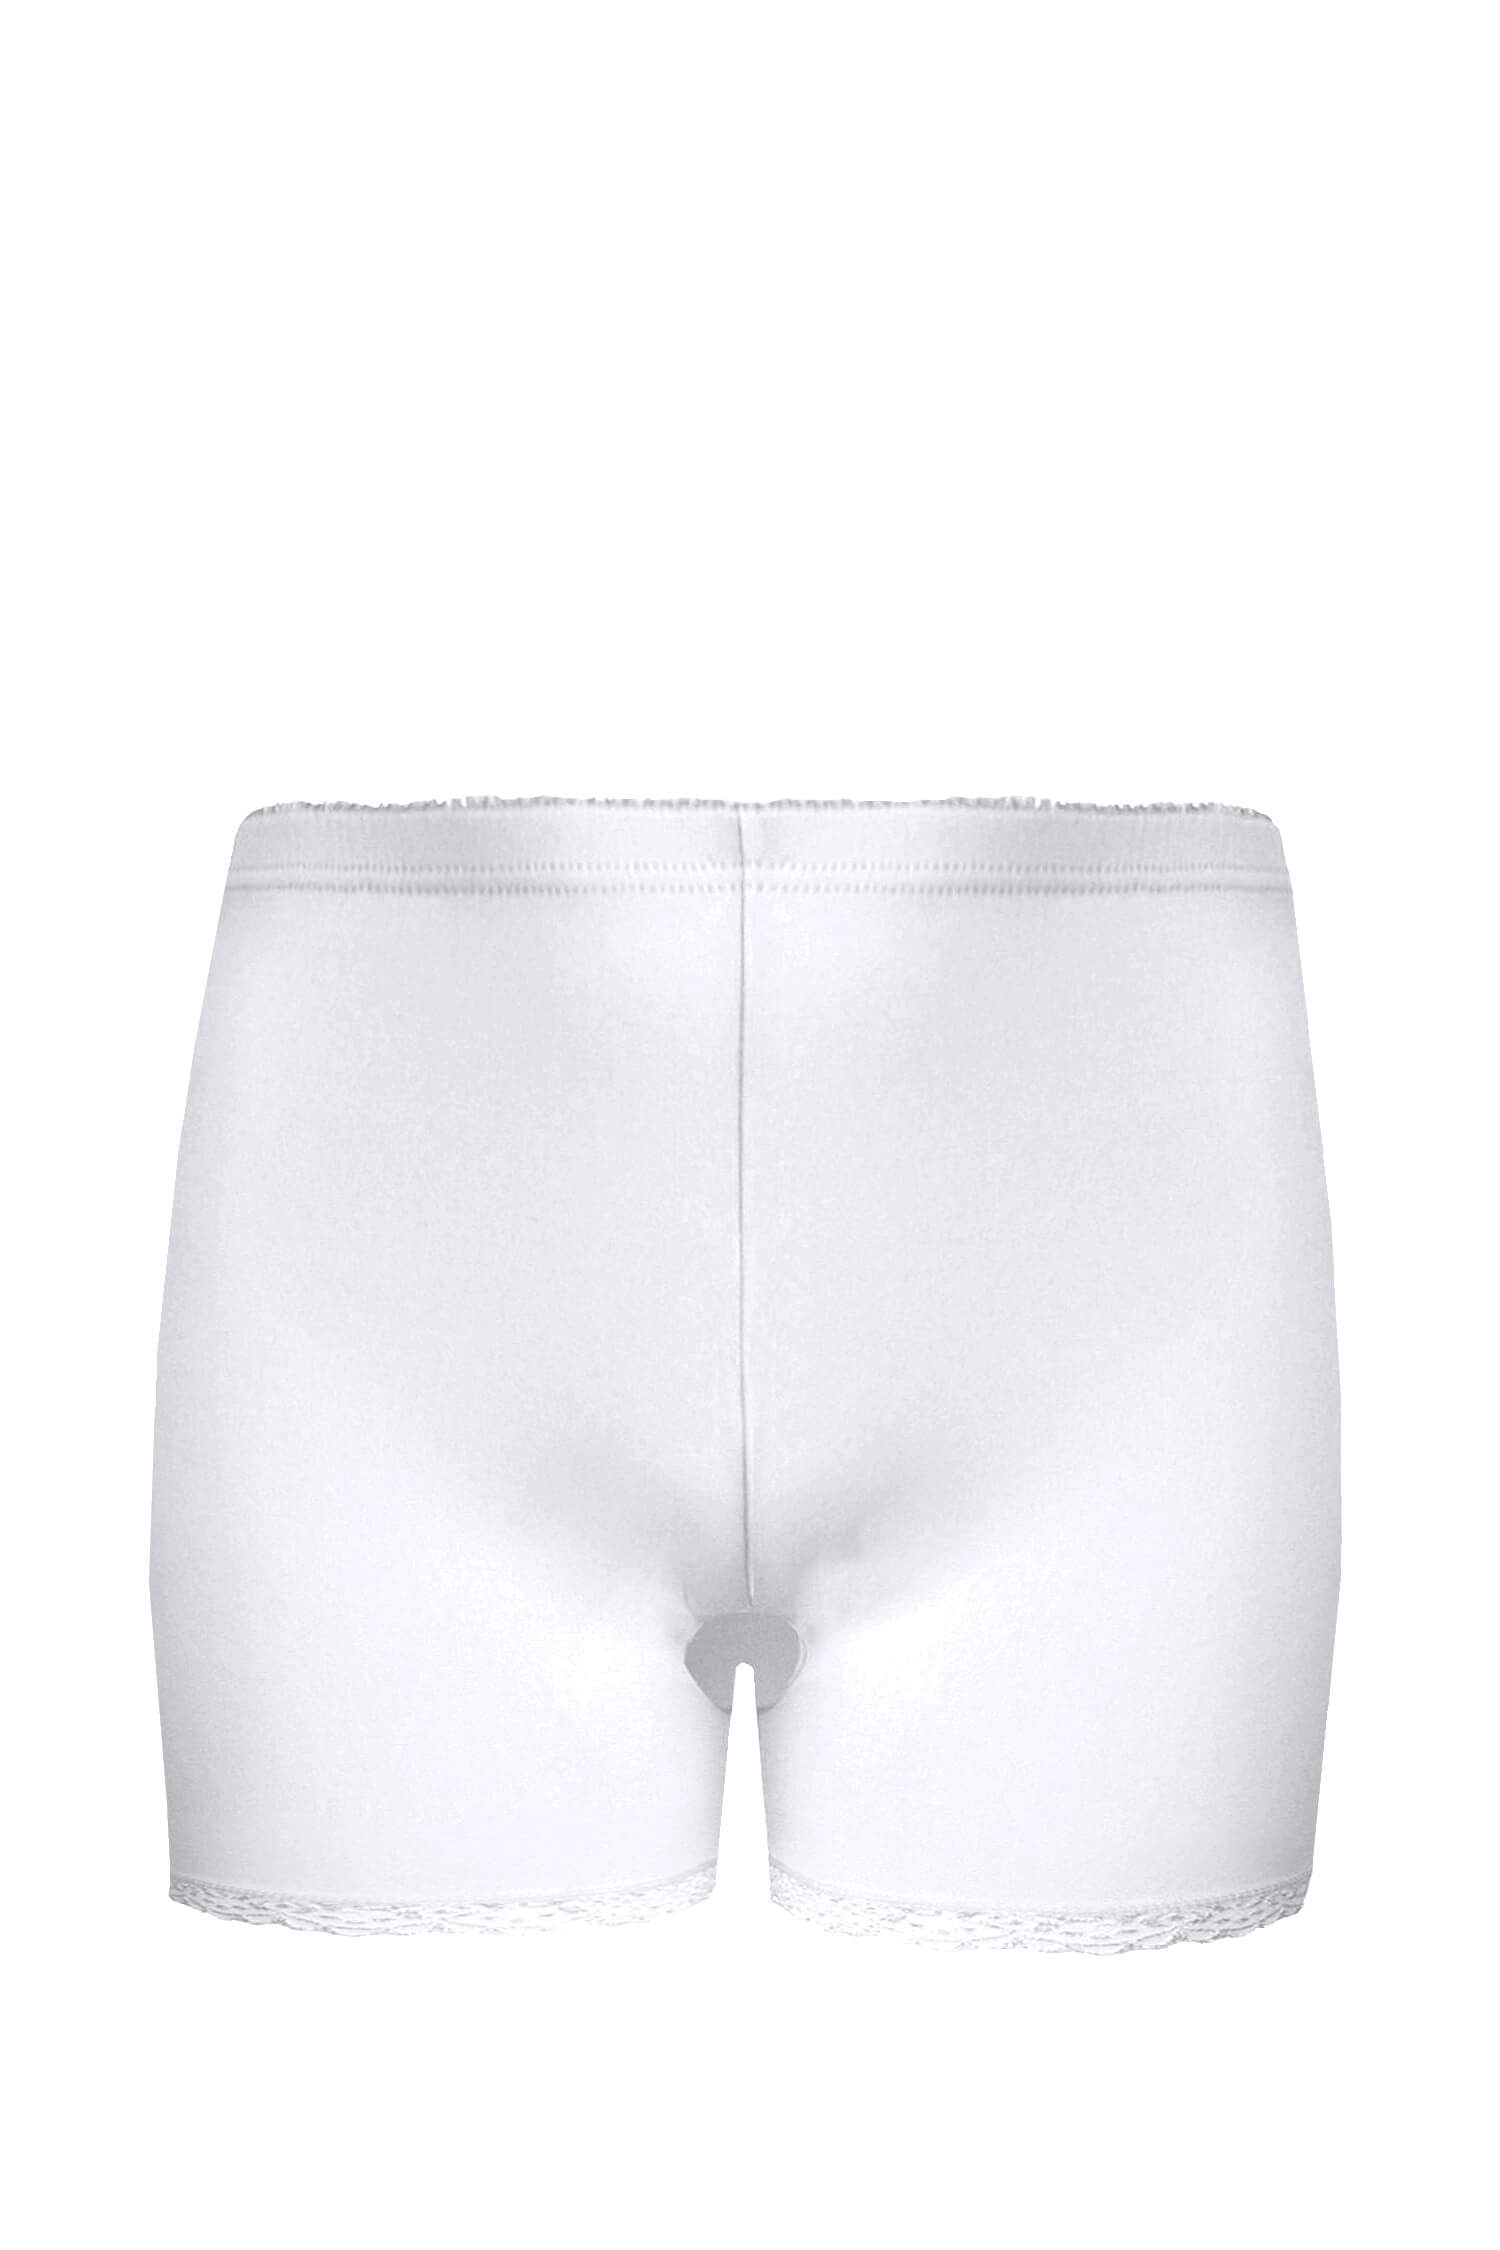 Helen kalhotky s nohavičkou krajka 703 XXL bílá